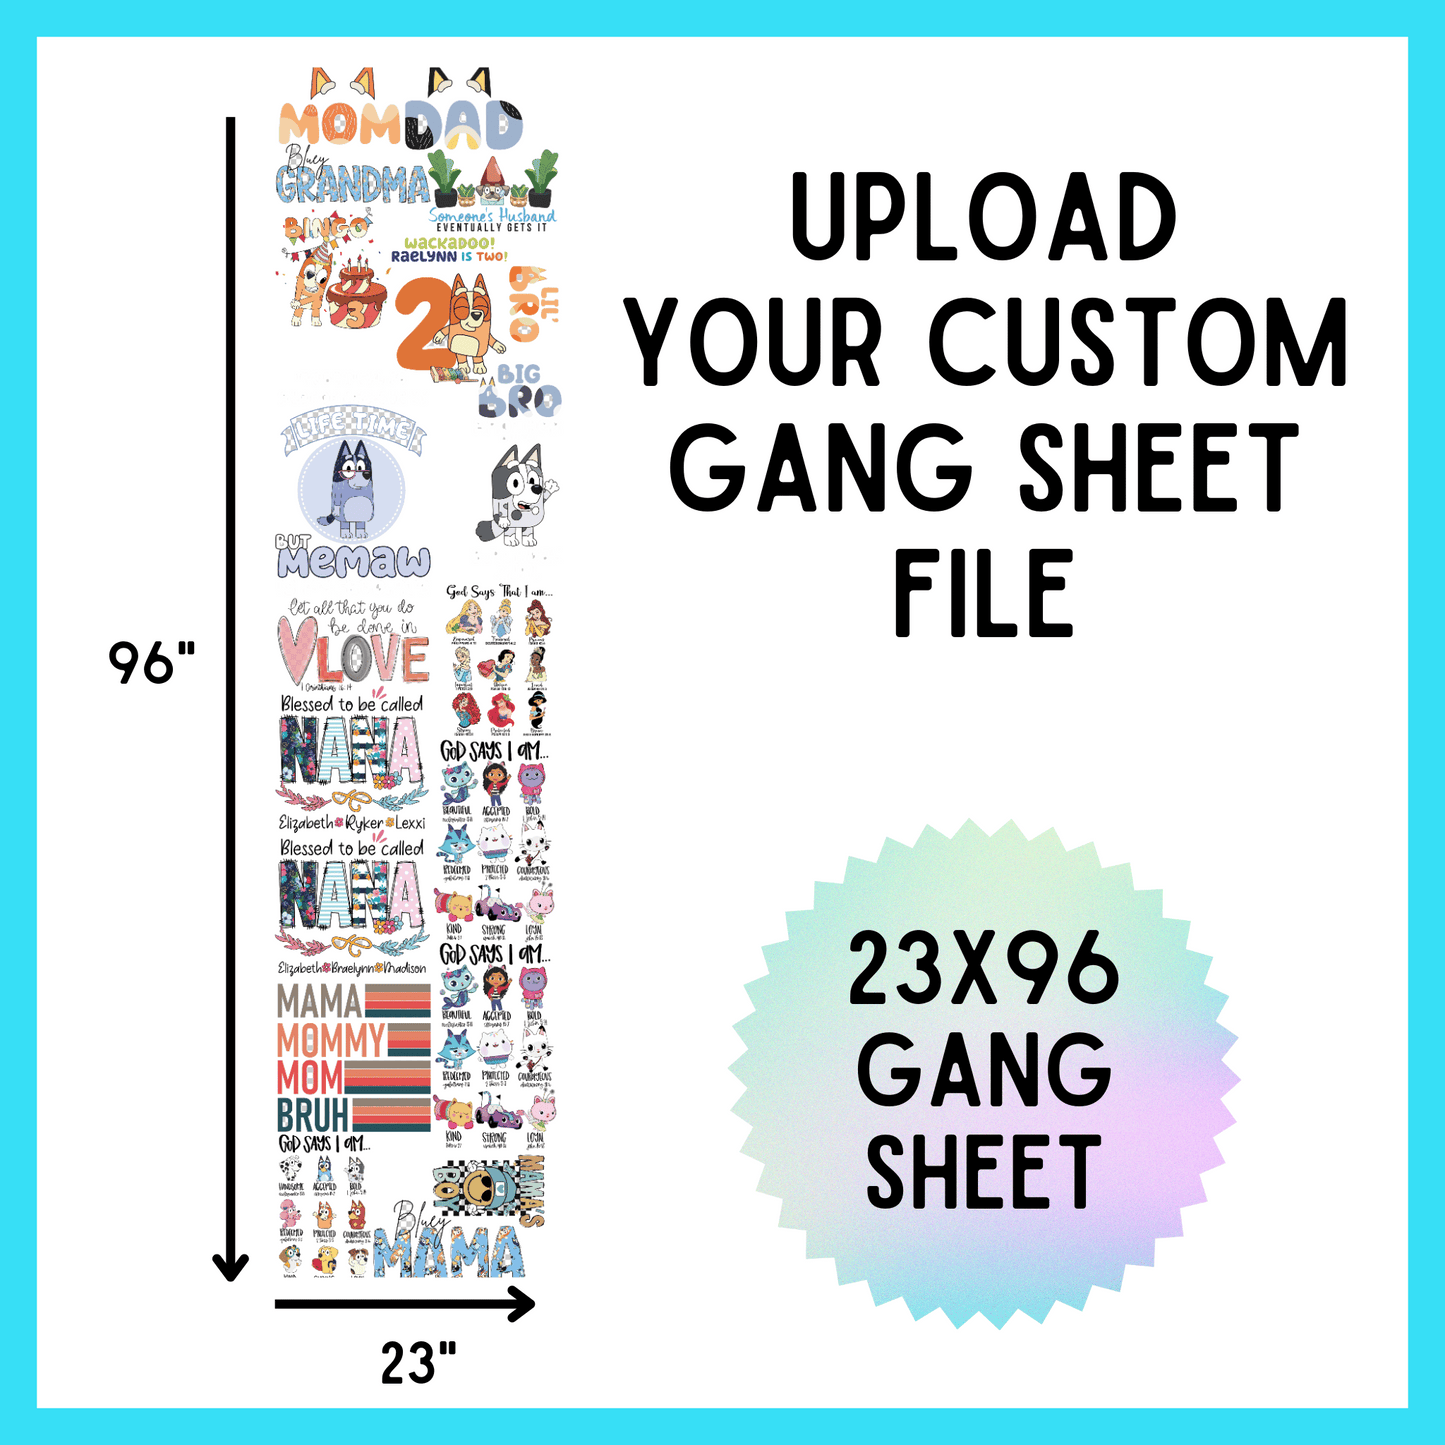 Upload Your Custom Gang Sheet File